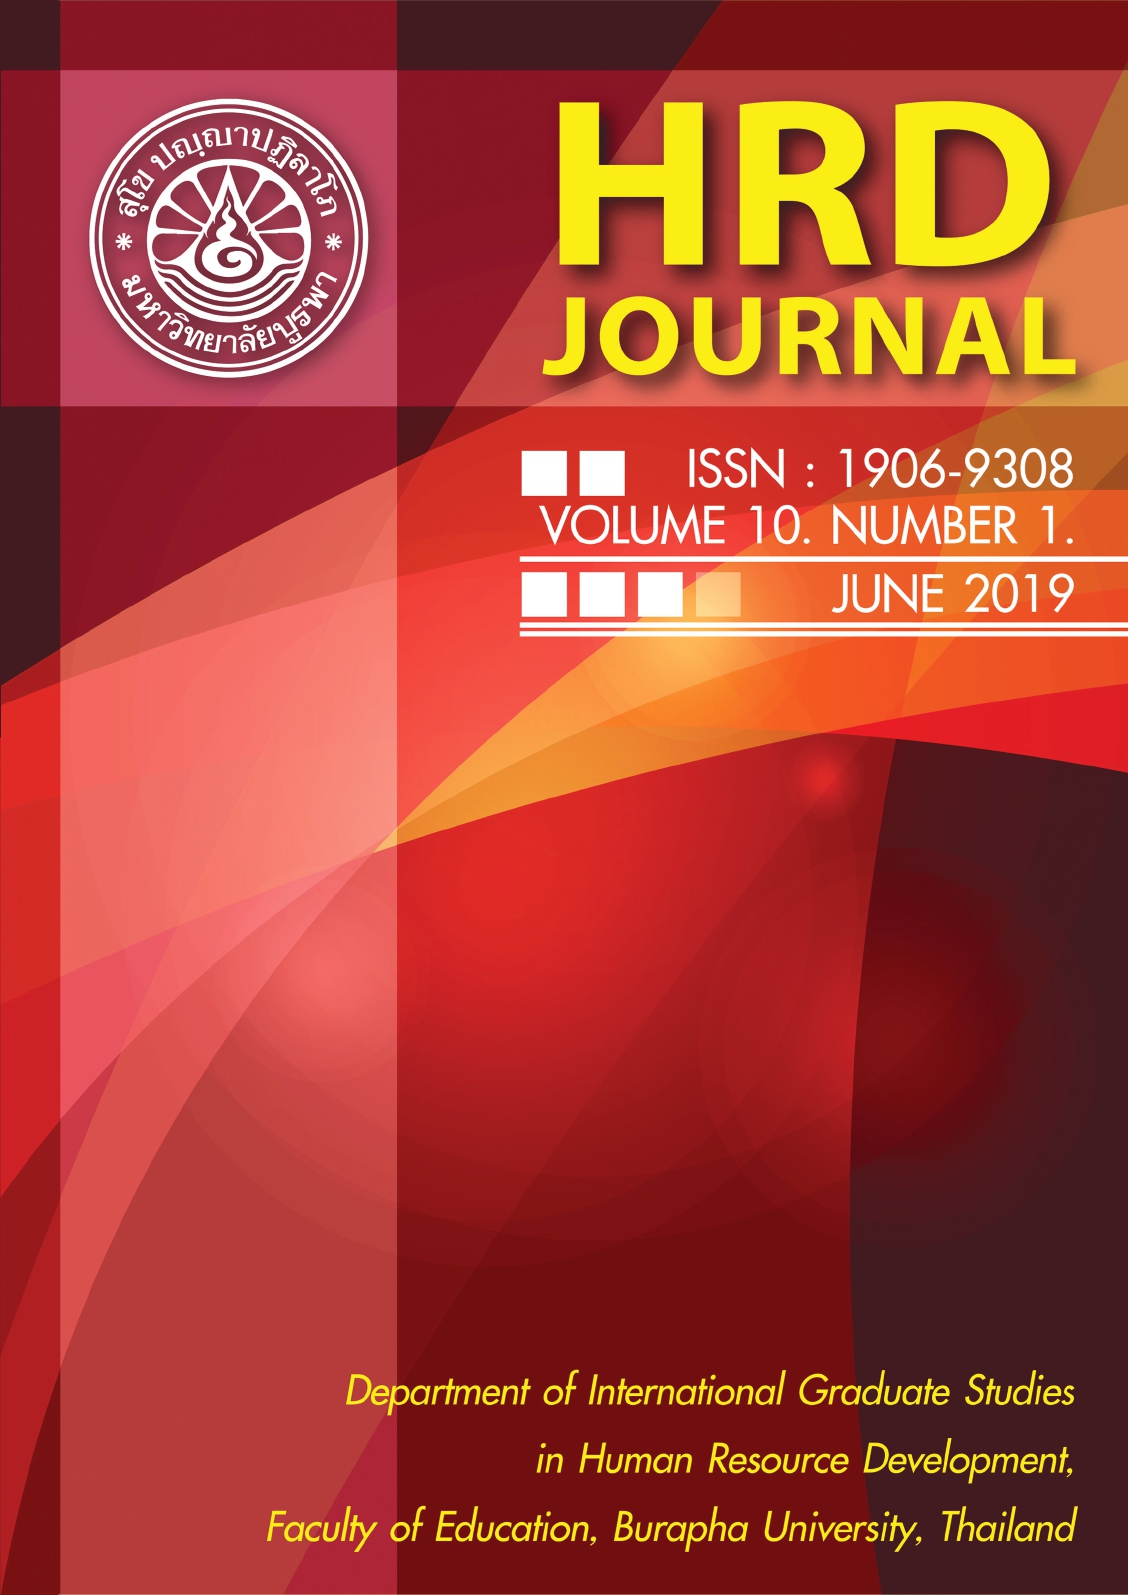 					View Vol. 10 No. 1 (2019): HRD Journal, Vol. 10, No. 1 (January-June 2019)
				